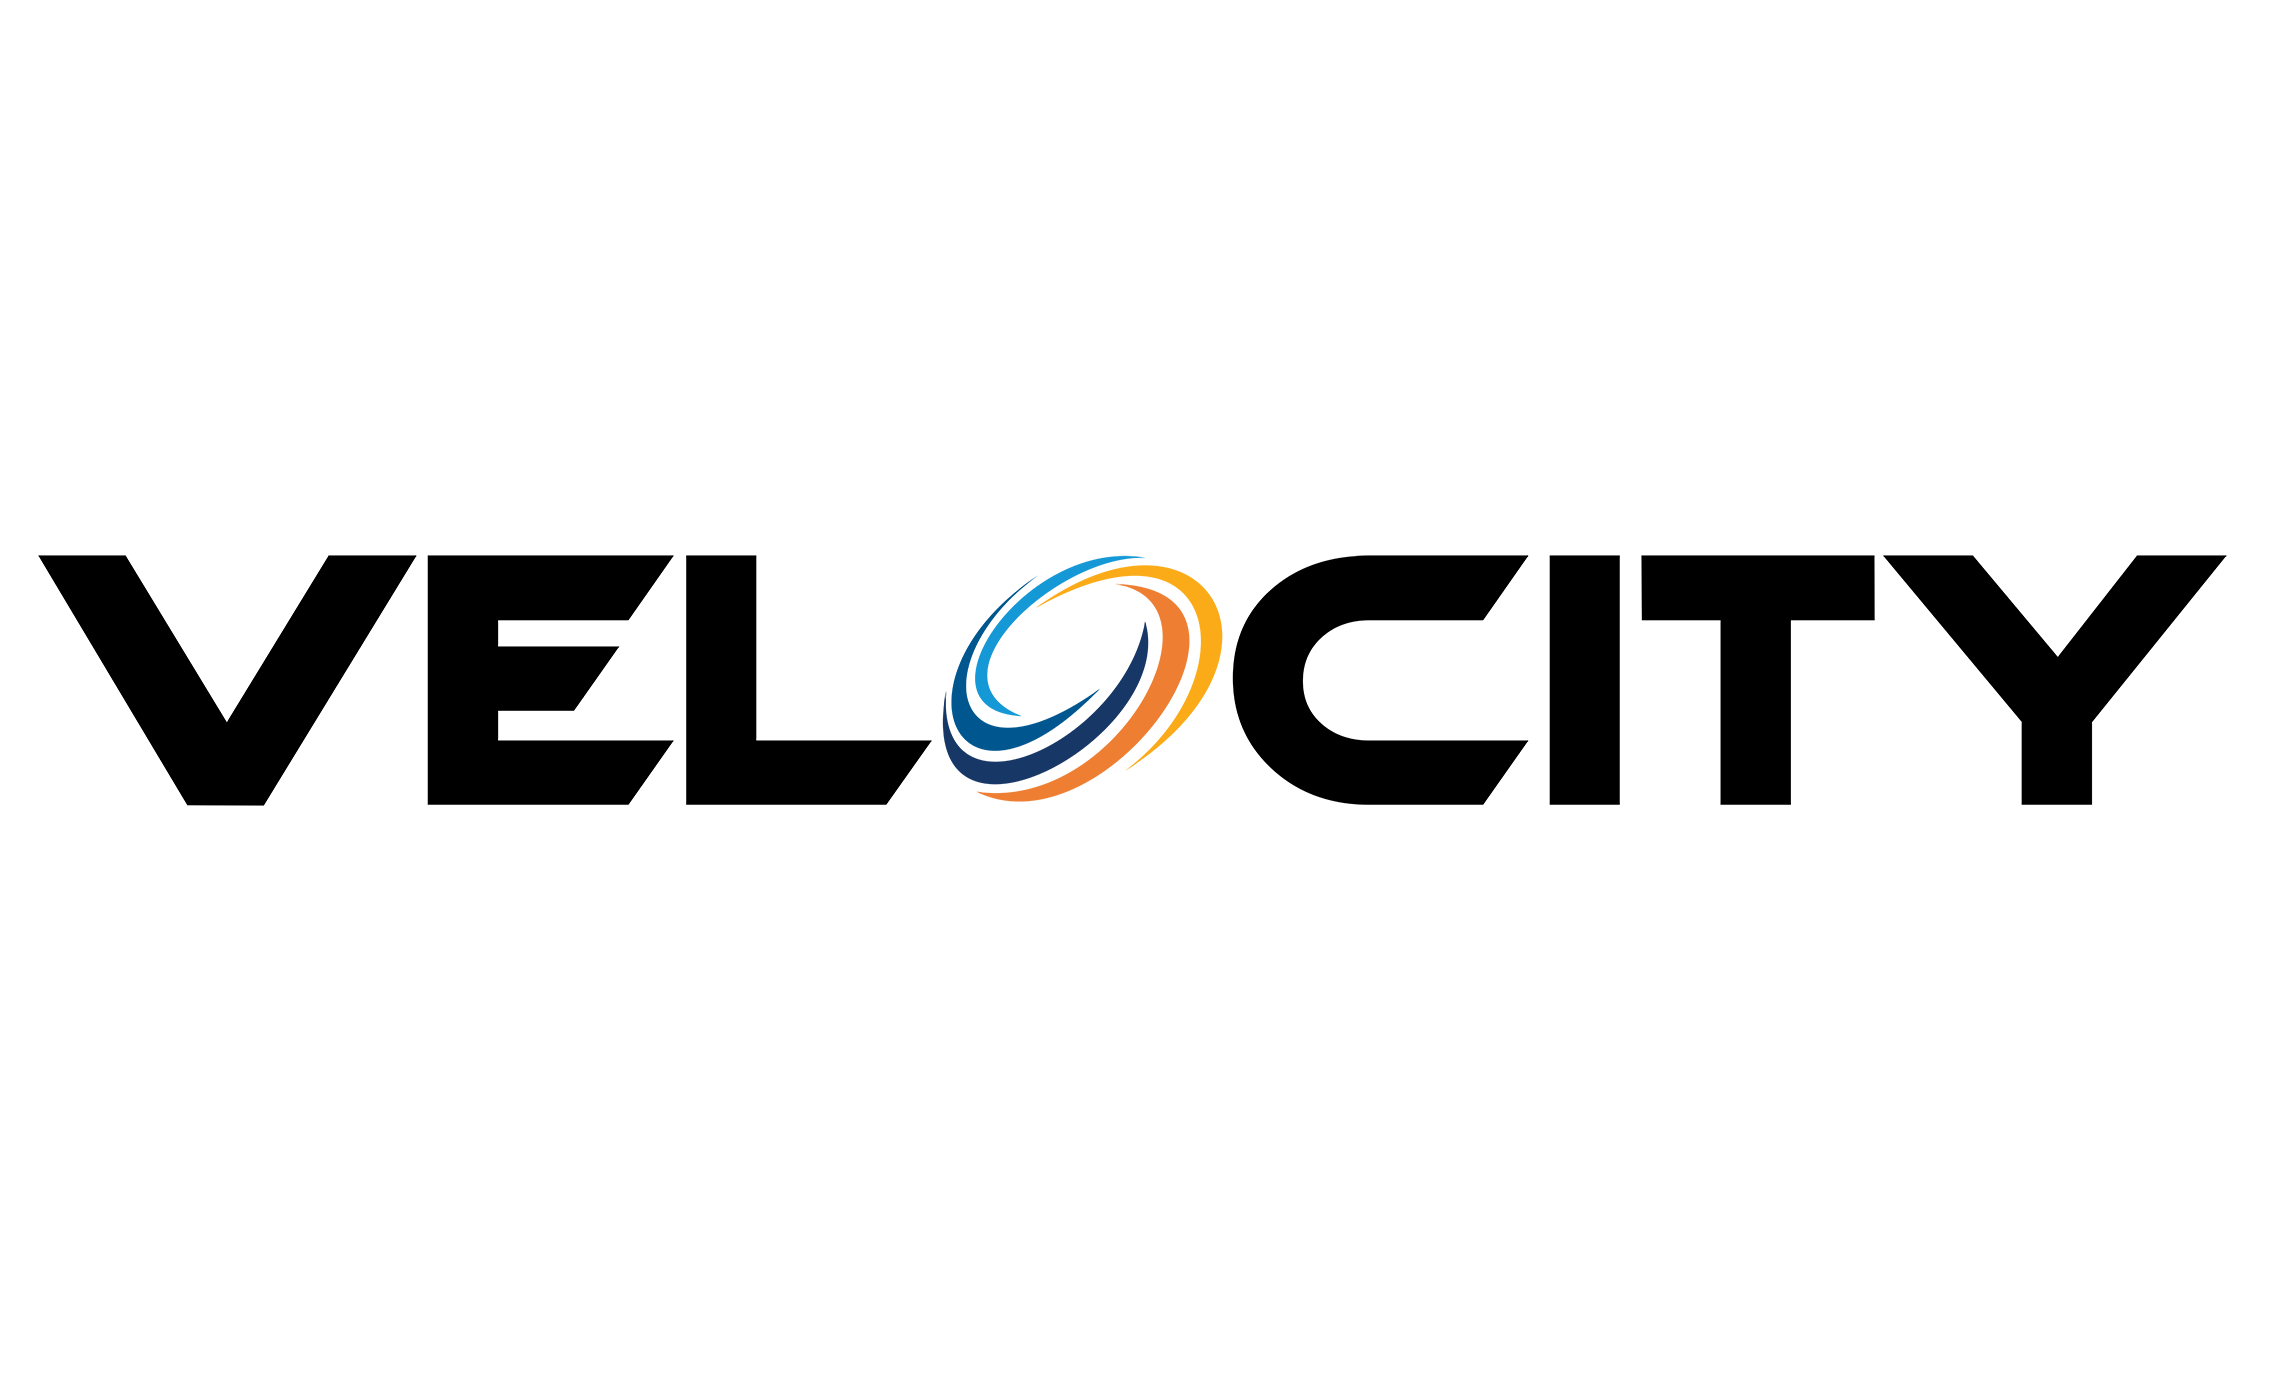 Velocity-logo